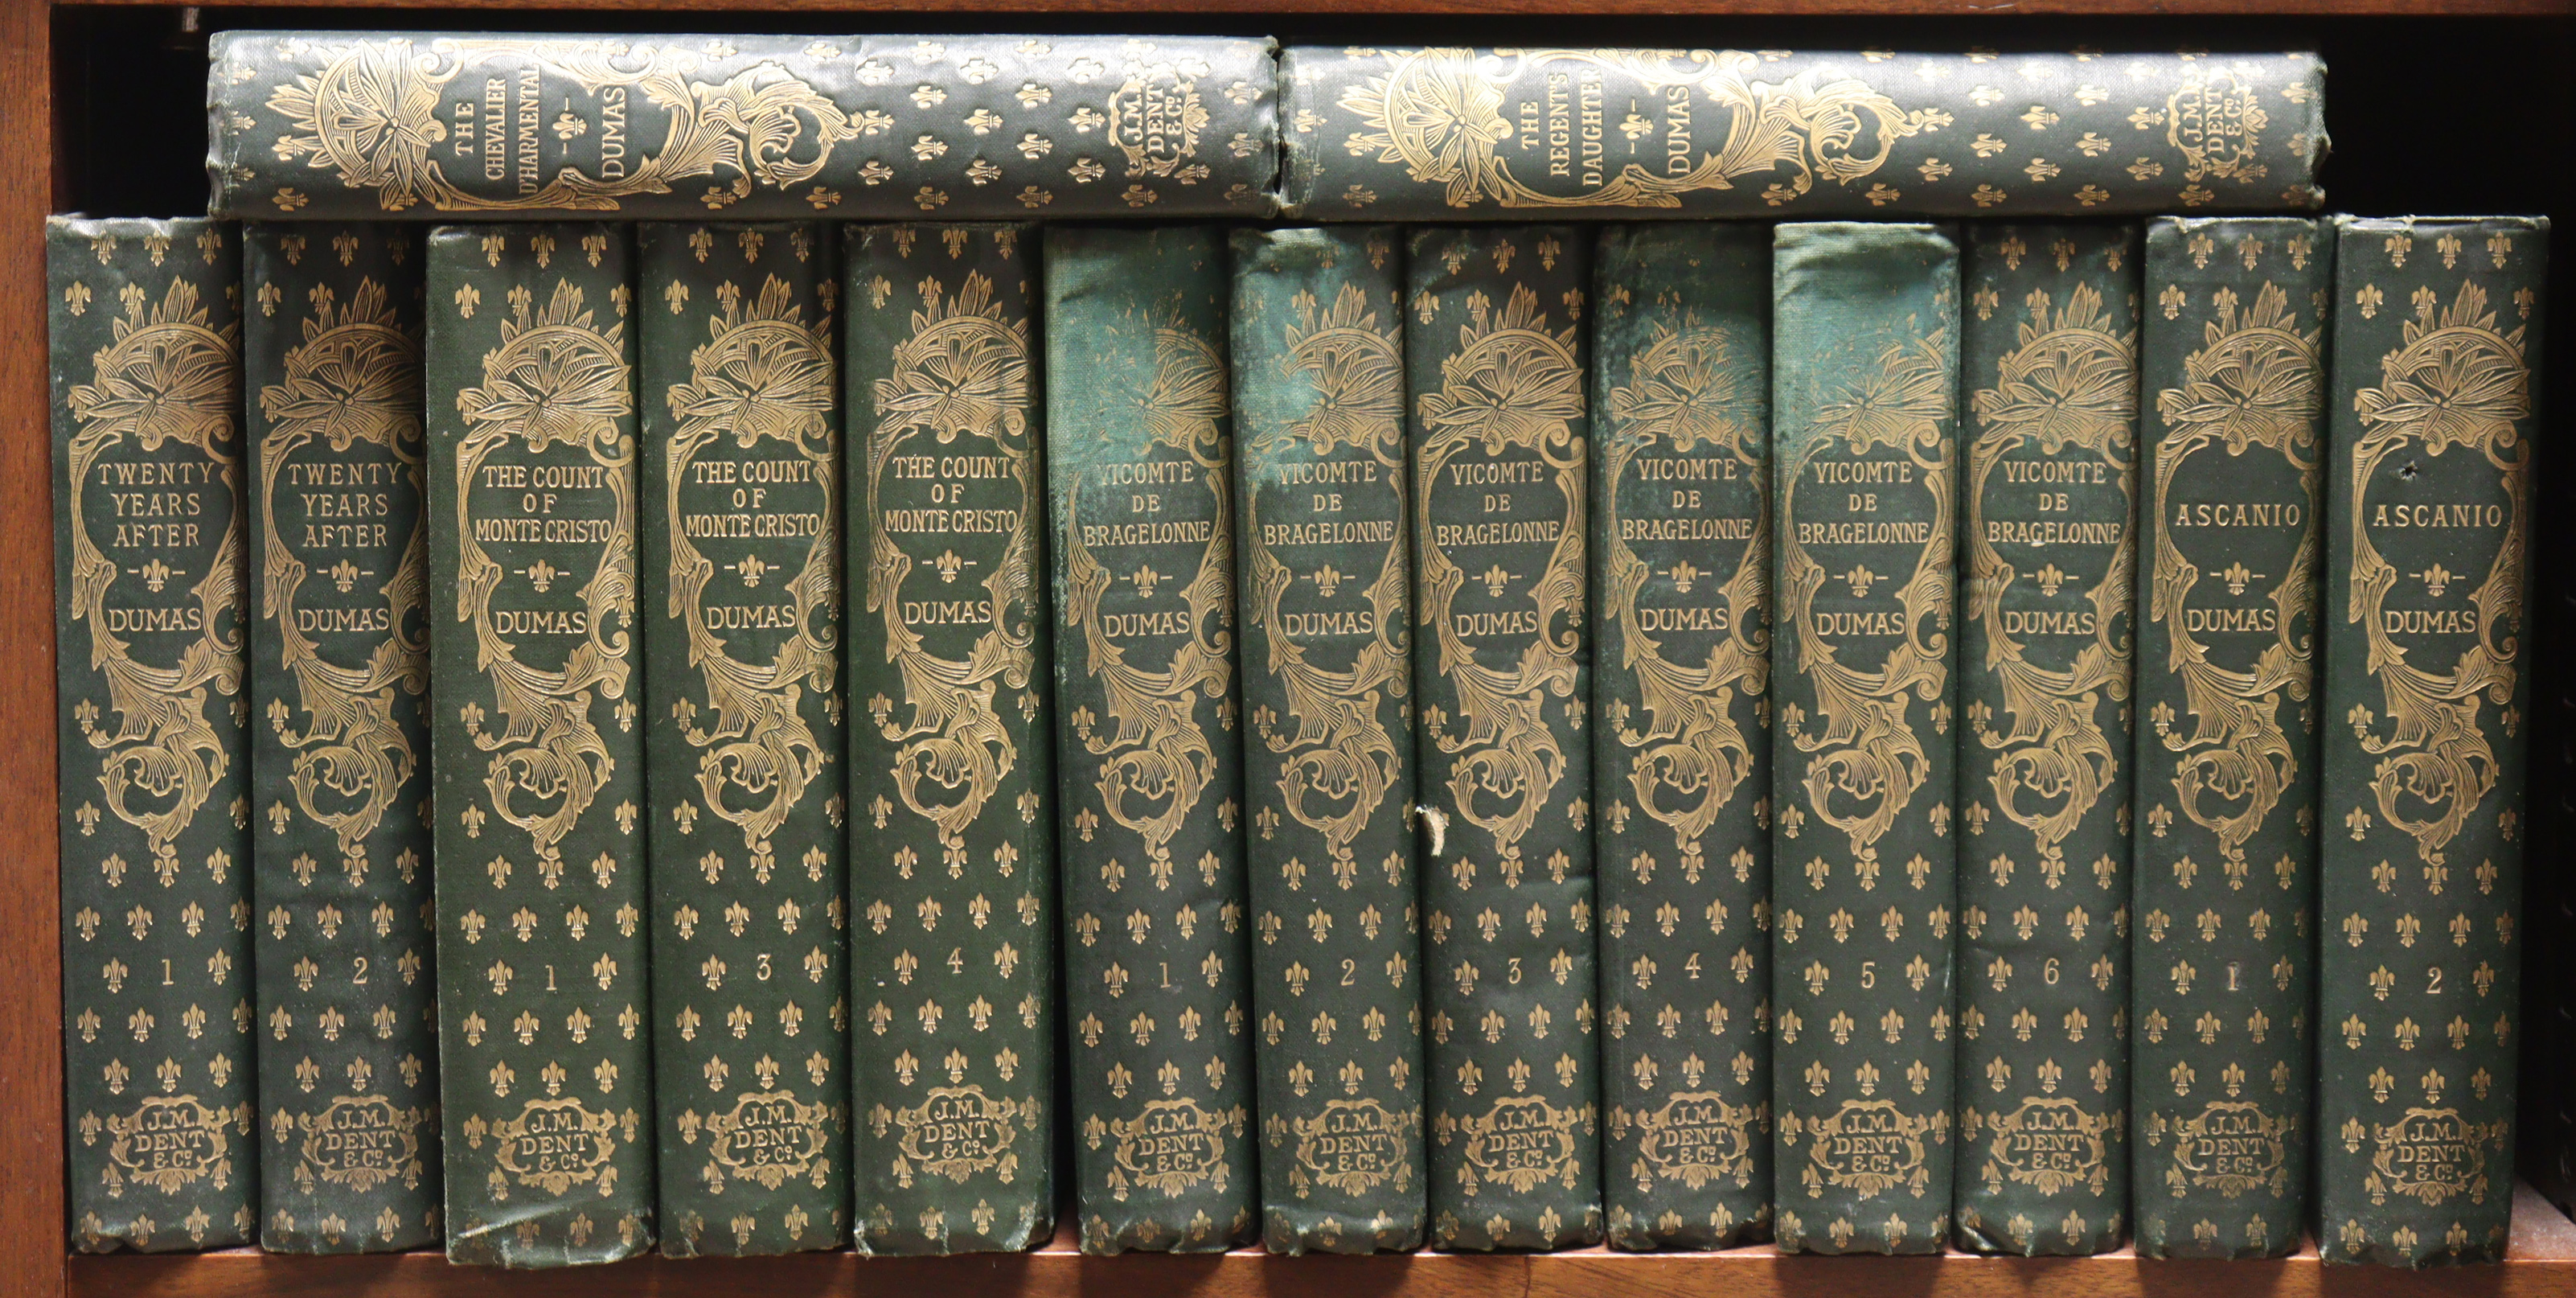 The works of Alexander Dumas, part set of 15 vols, published by J. M. Dent & Co., London, 1894-1901,